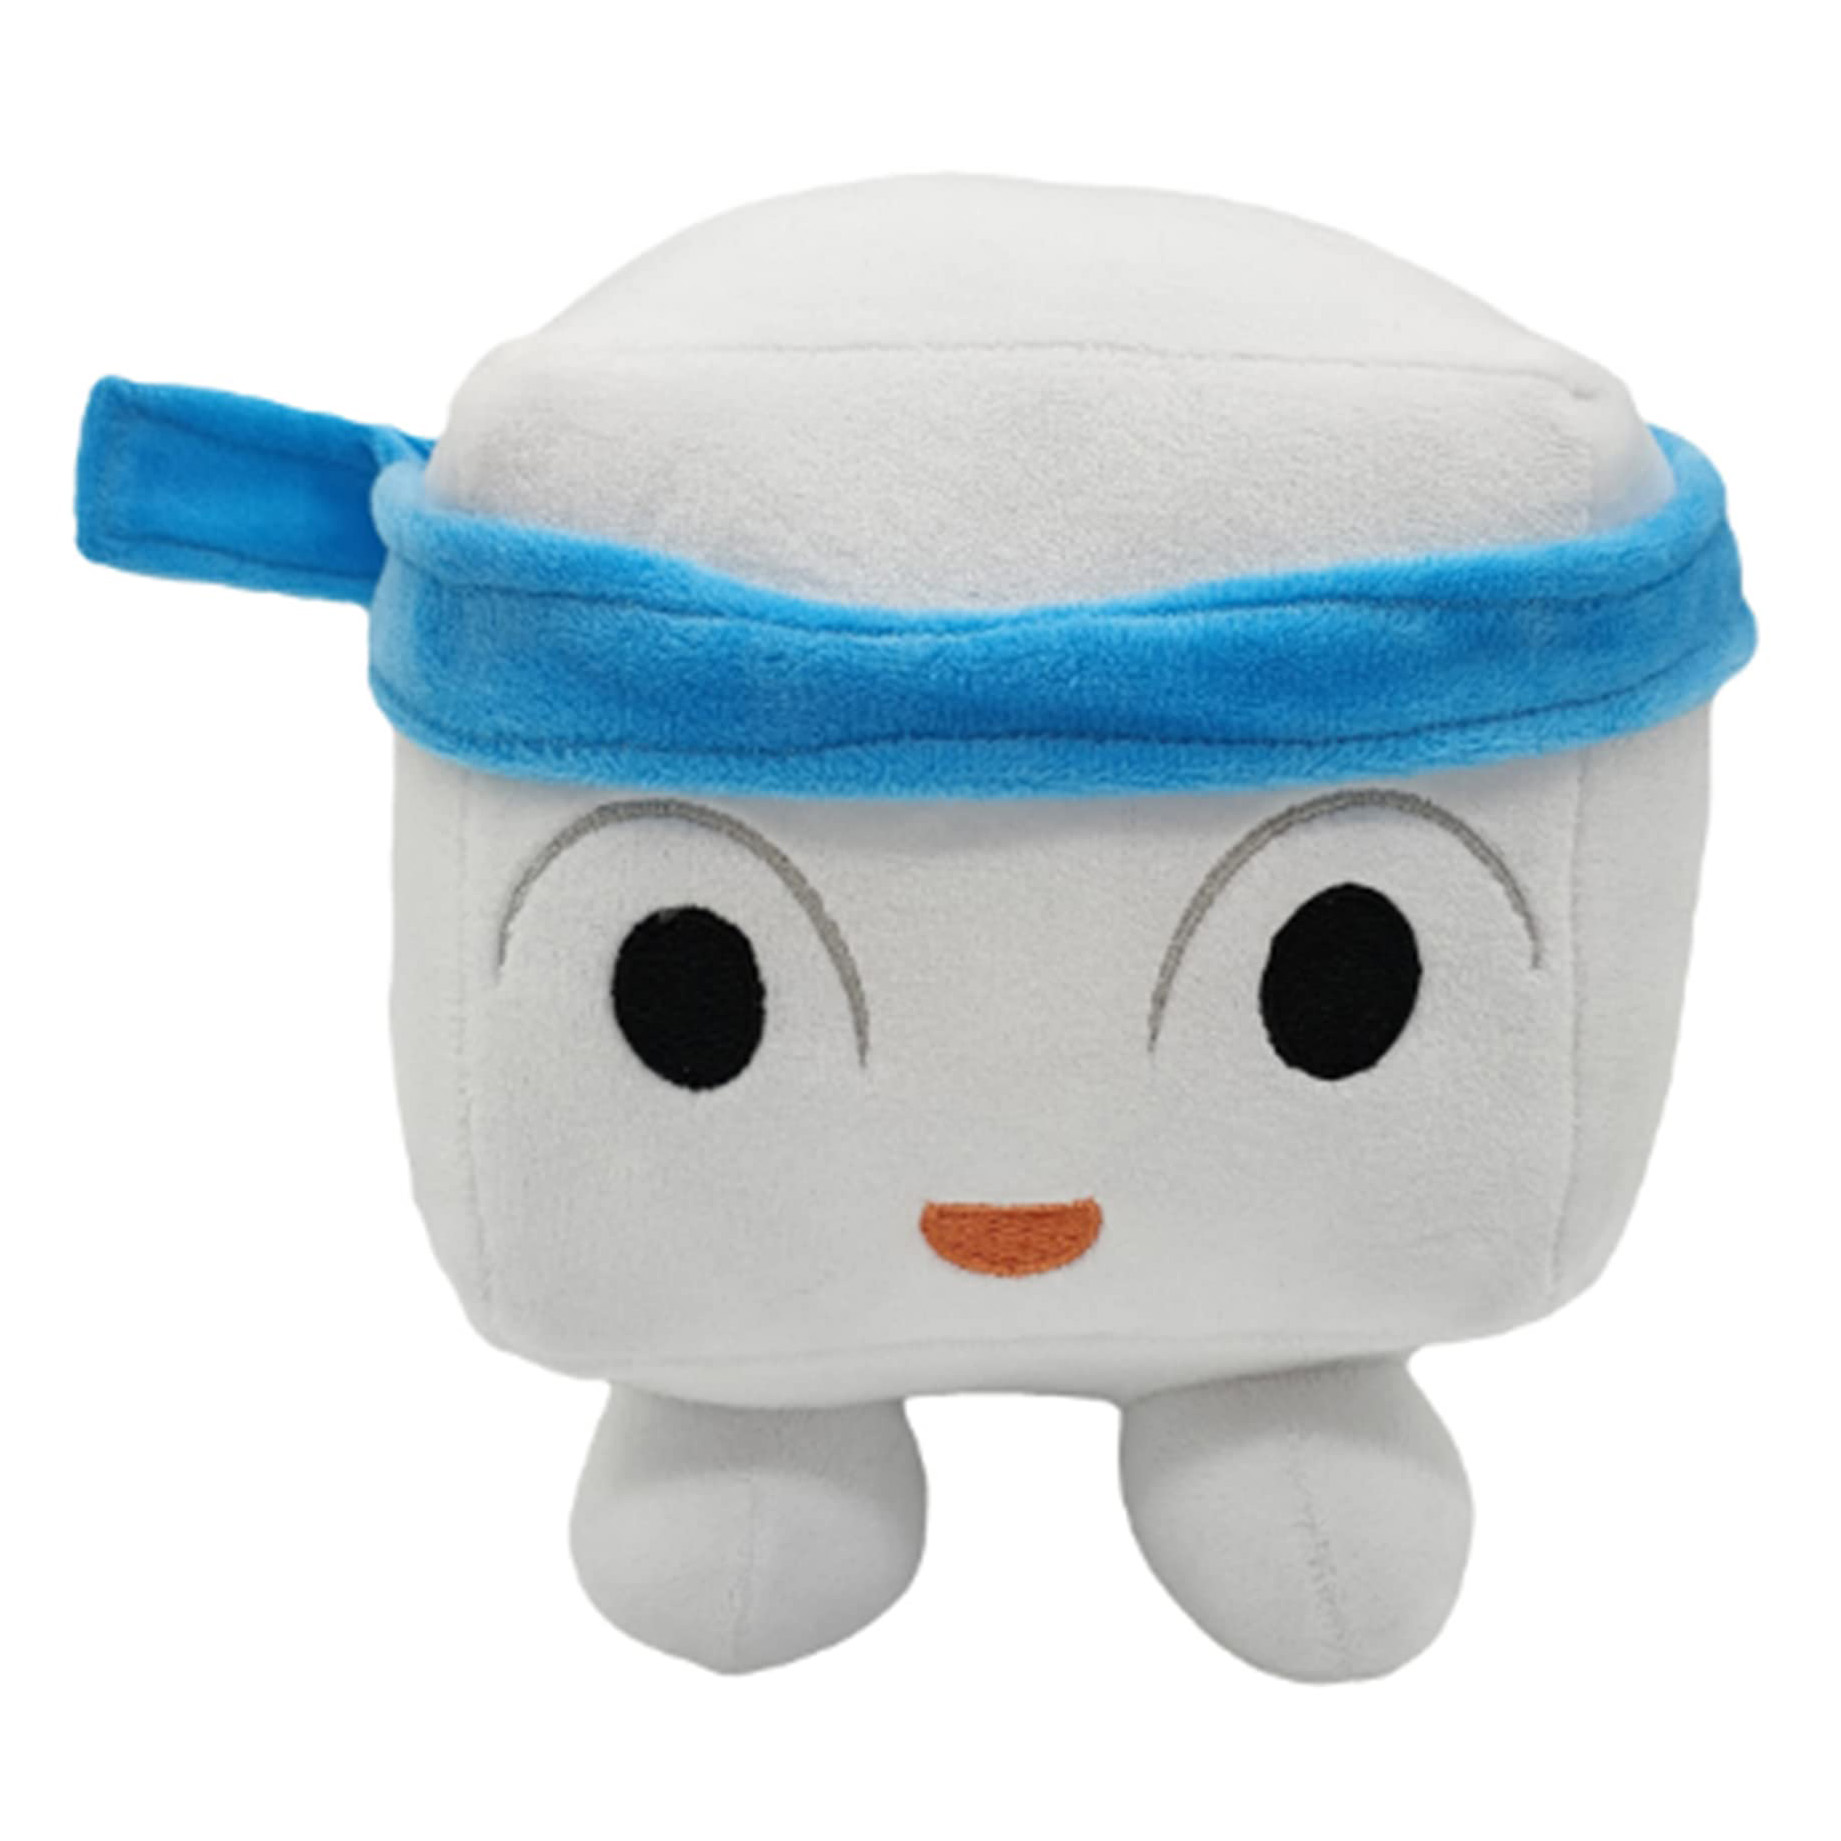 Dumpling Stuffed Animal Kawaii Cute Soft Toy for Kids and Fans